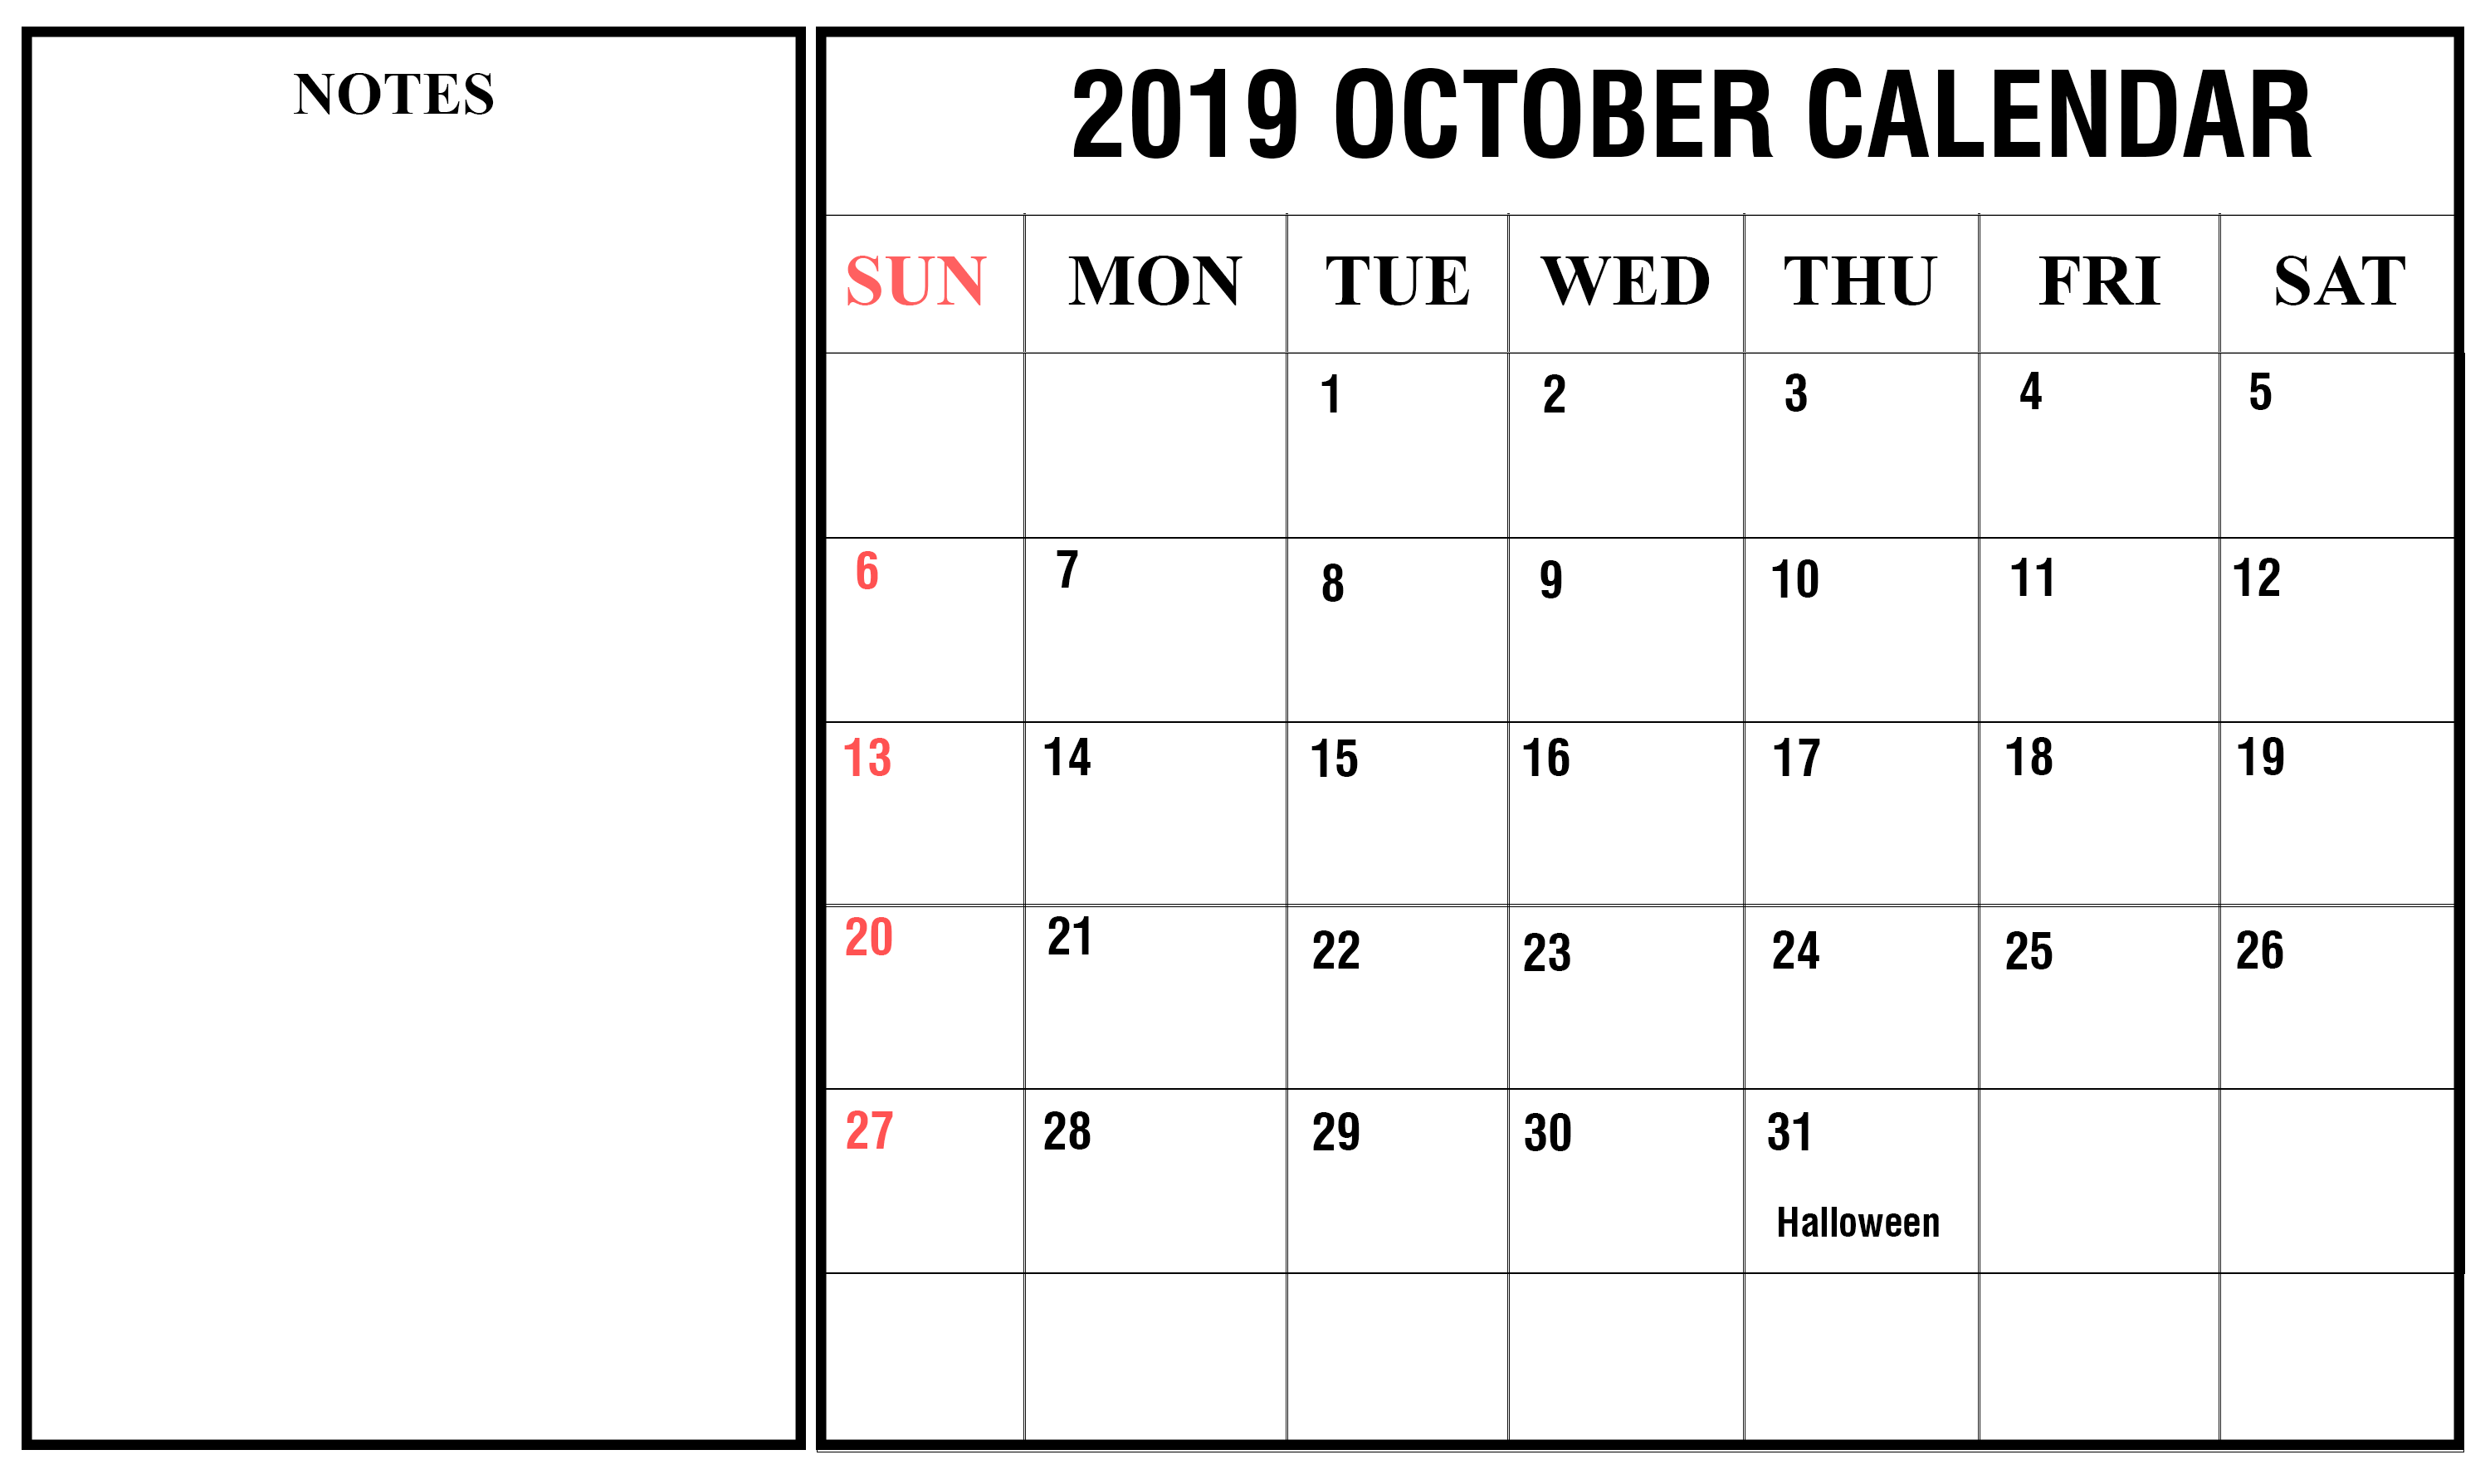 2019 October Holidays Calendar